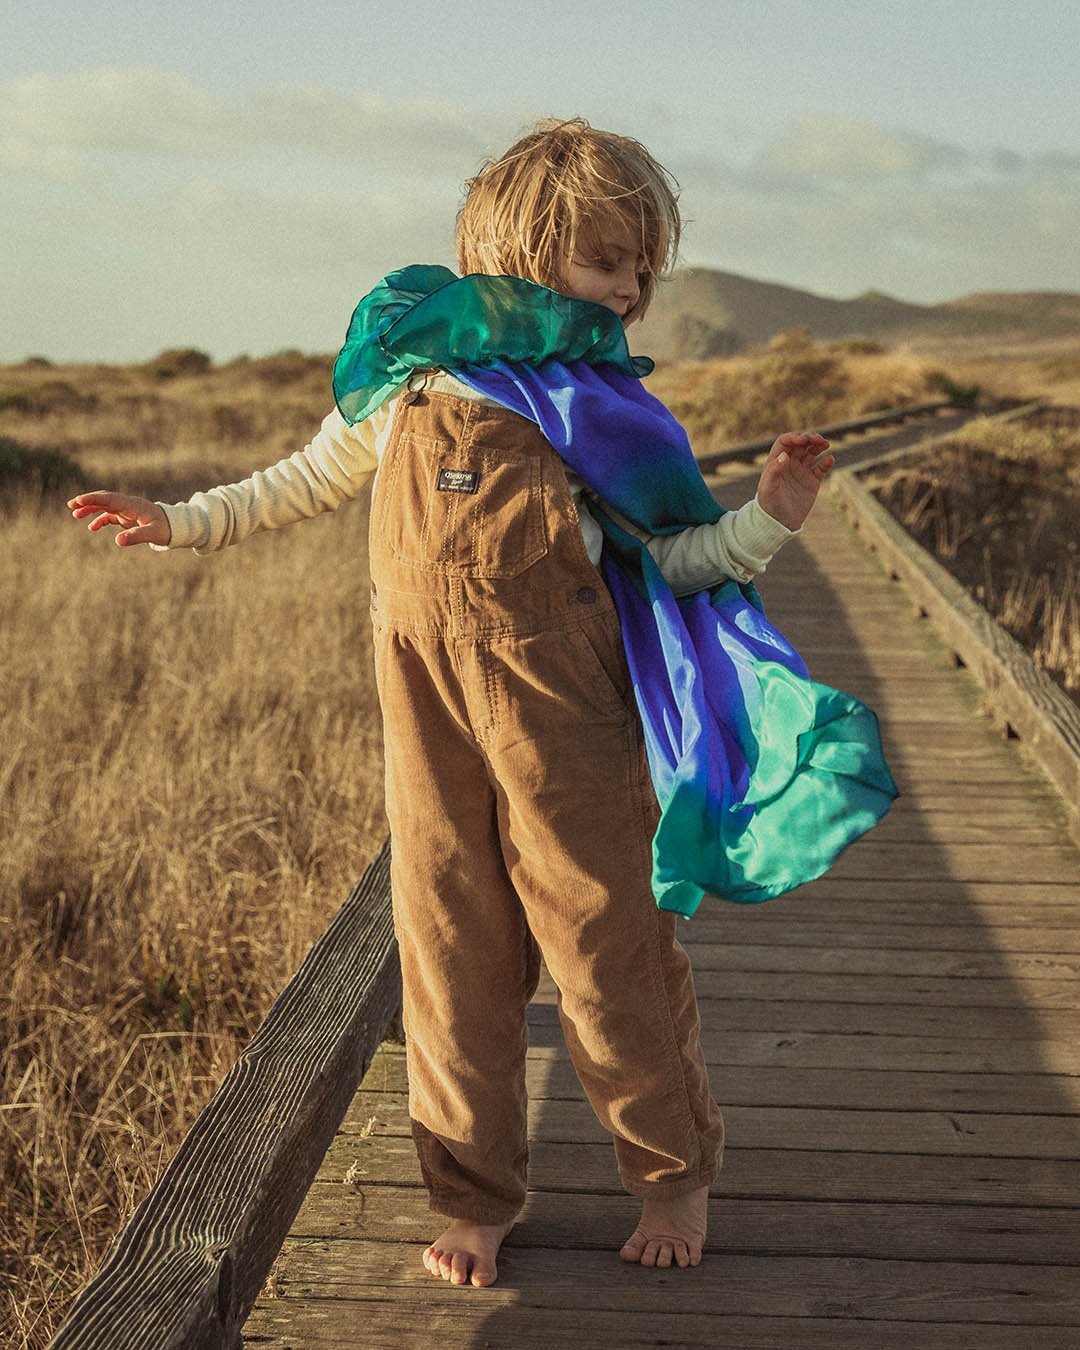 ocean silk cape on a child on a board walk in overalls